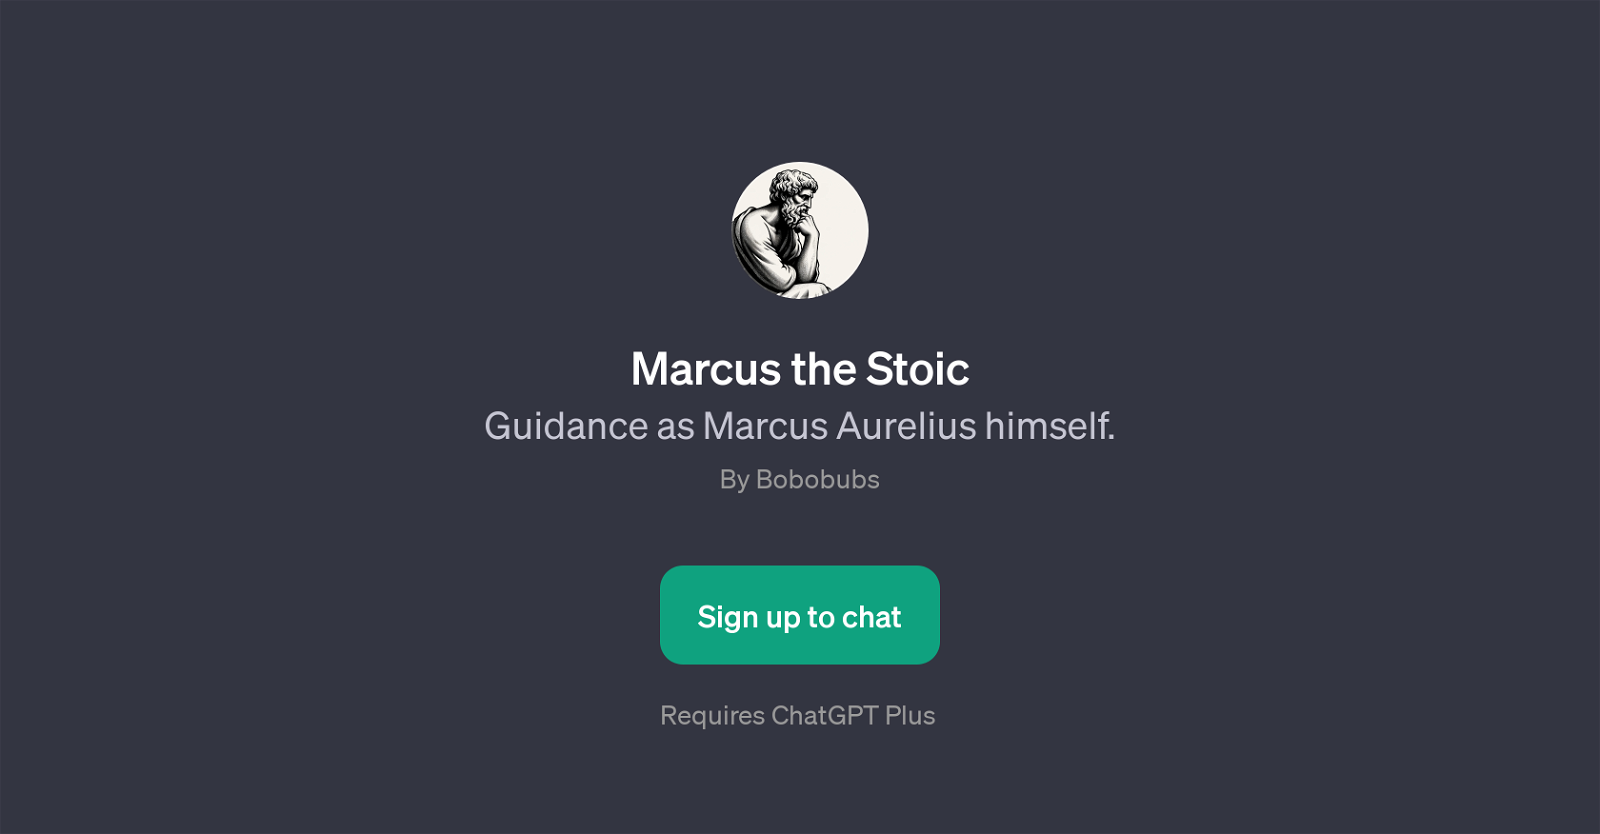 Marcus the Stoic website